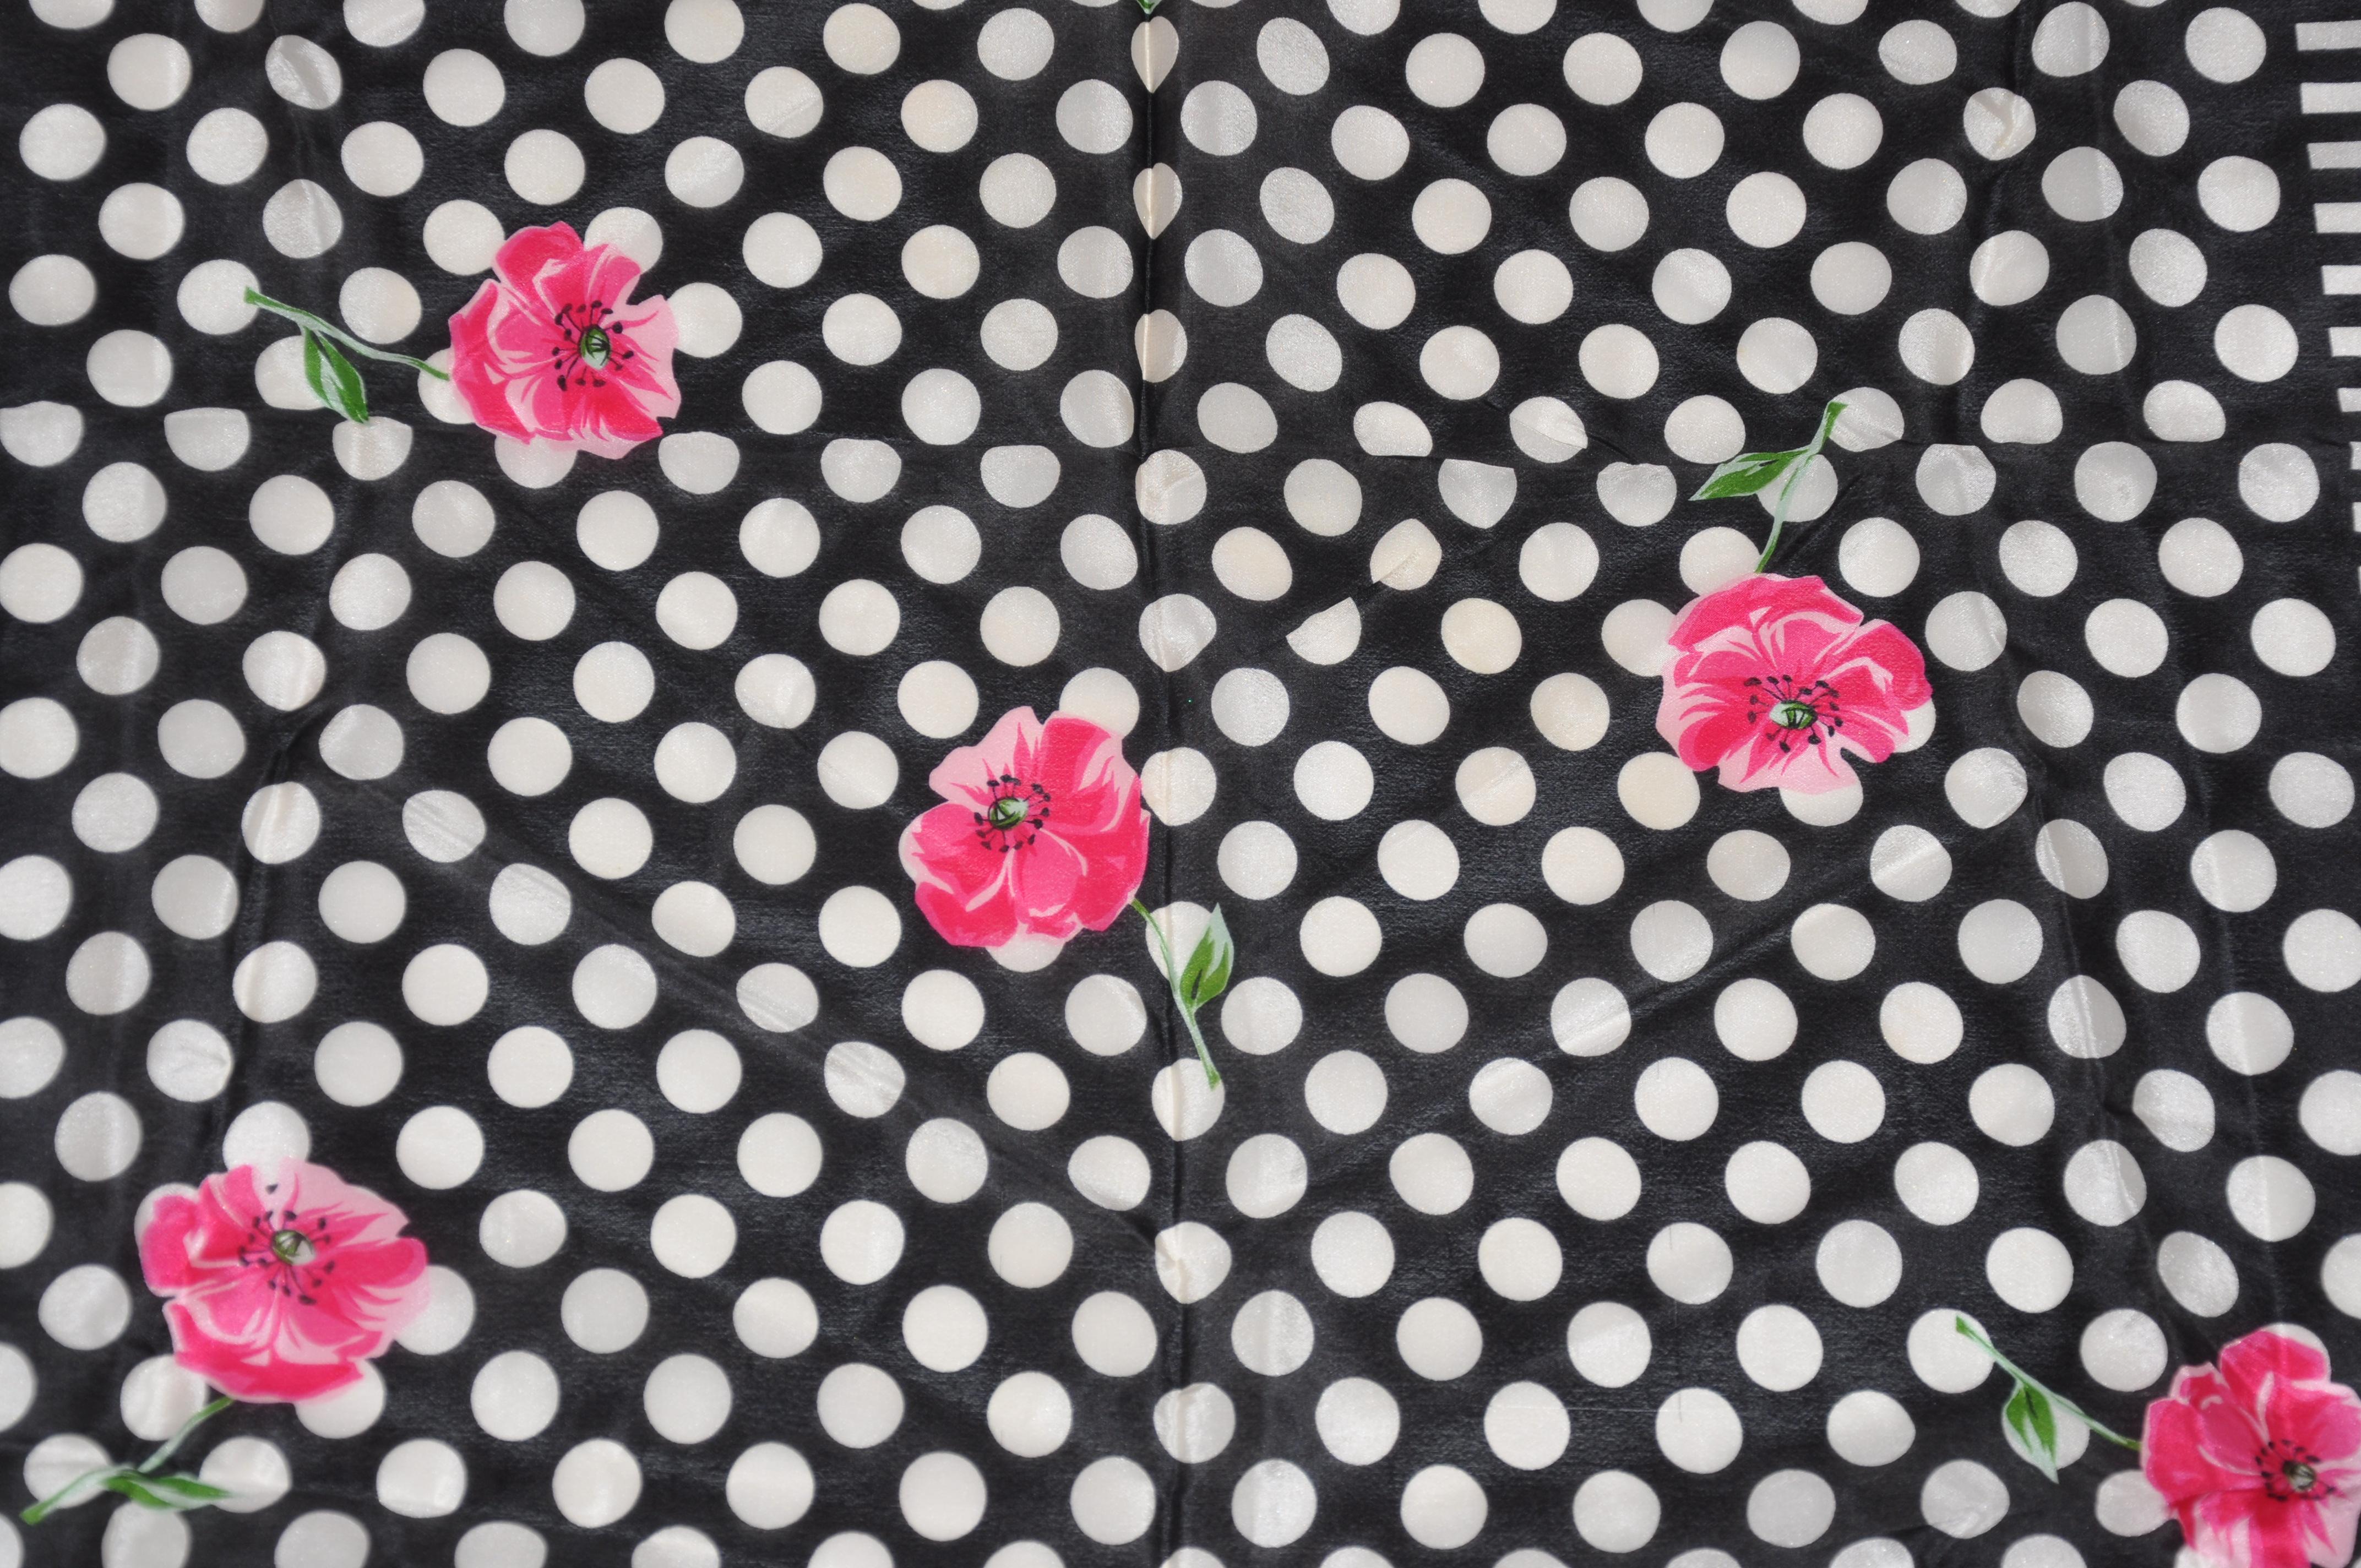        Pañuelo de seda Adrienne Vittadini Wonderfully Joyous Popping Fuchsia Florals among Bold black and white stripes and polka dots acentuado con bordes enrollados, mide 30 pulgadas por 31 pulgadas. Fabricado en Italia.